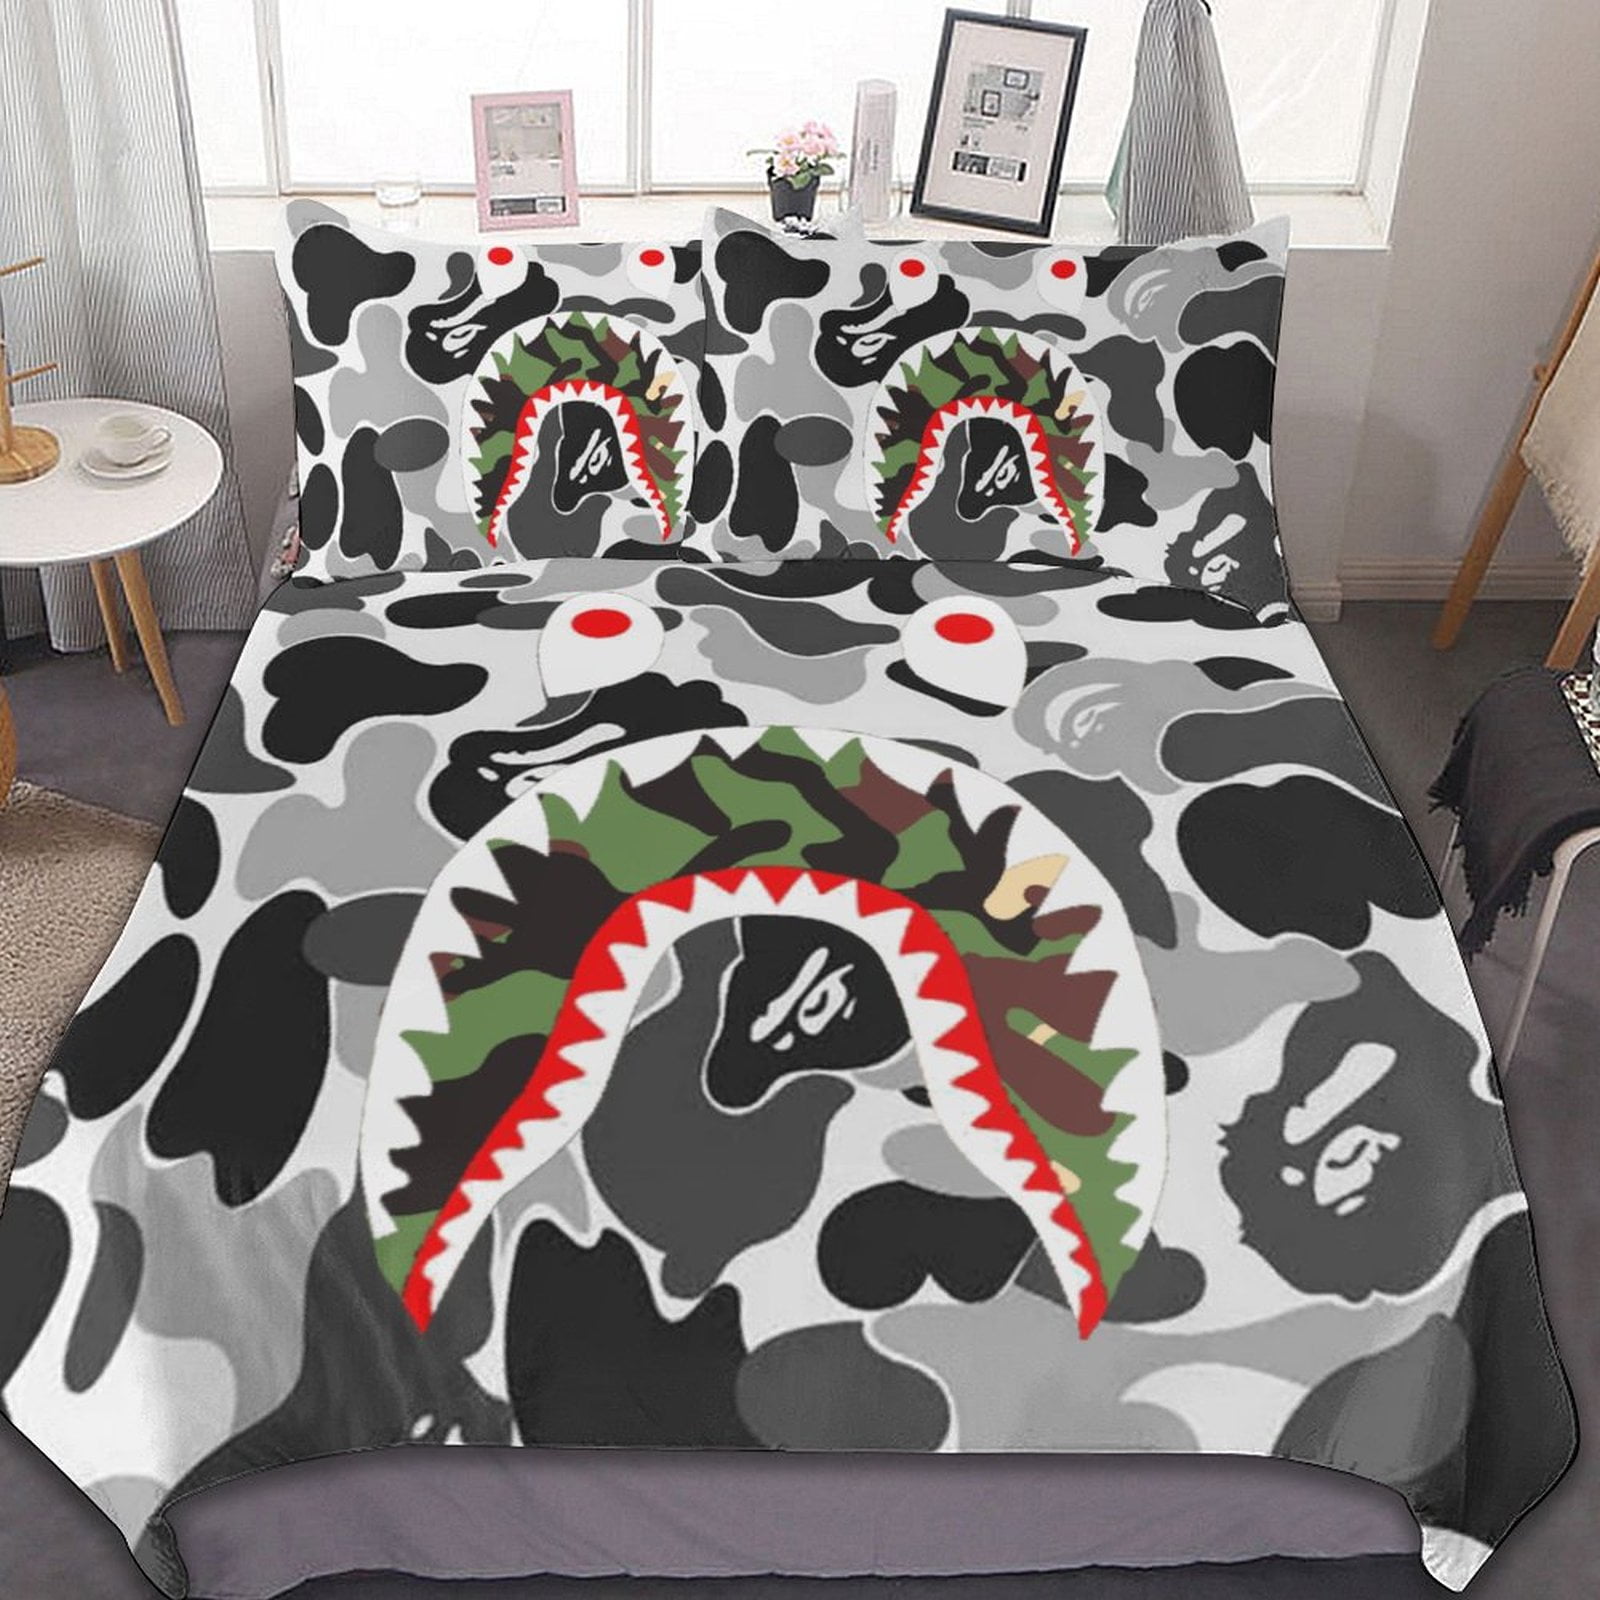 Bape Camo Shark 3-Piece Bedding Set 86 inchx70 inch Duvet Cover & 2 Pillow Shams Set Soft Bed Sheets, Size: 86 x 70, Black